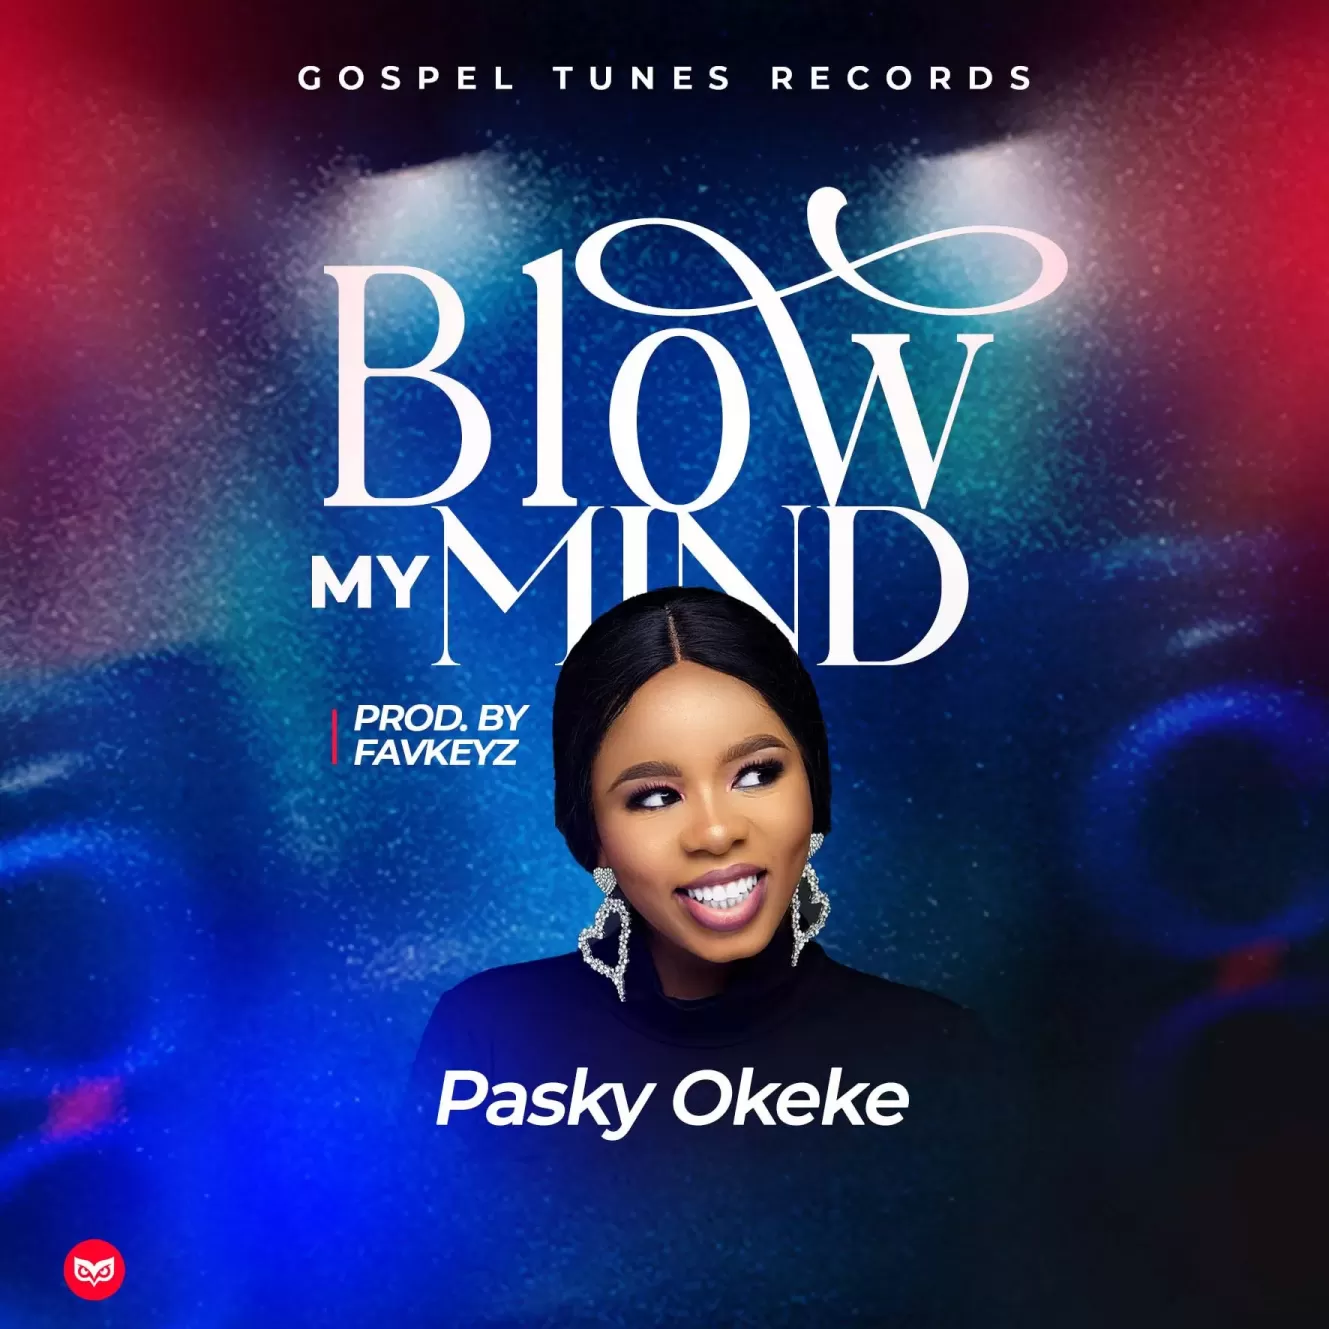 Pasky Okeke - Blow my mind